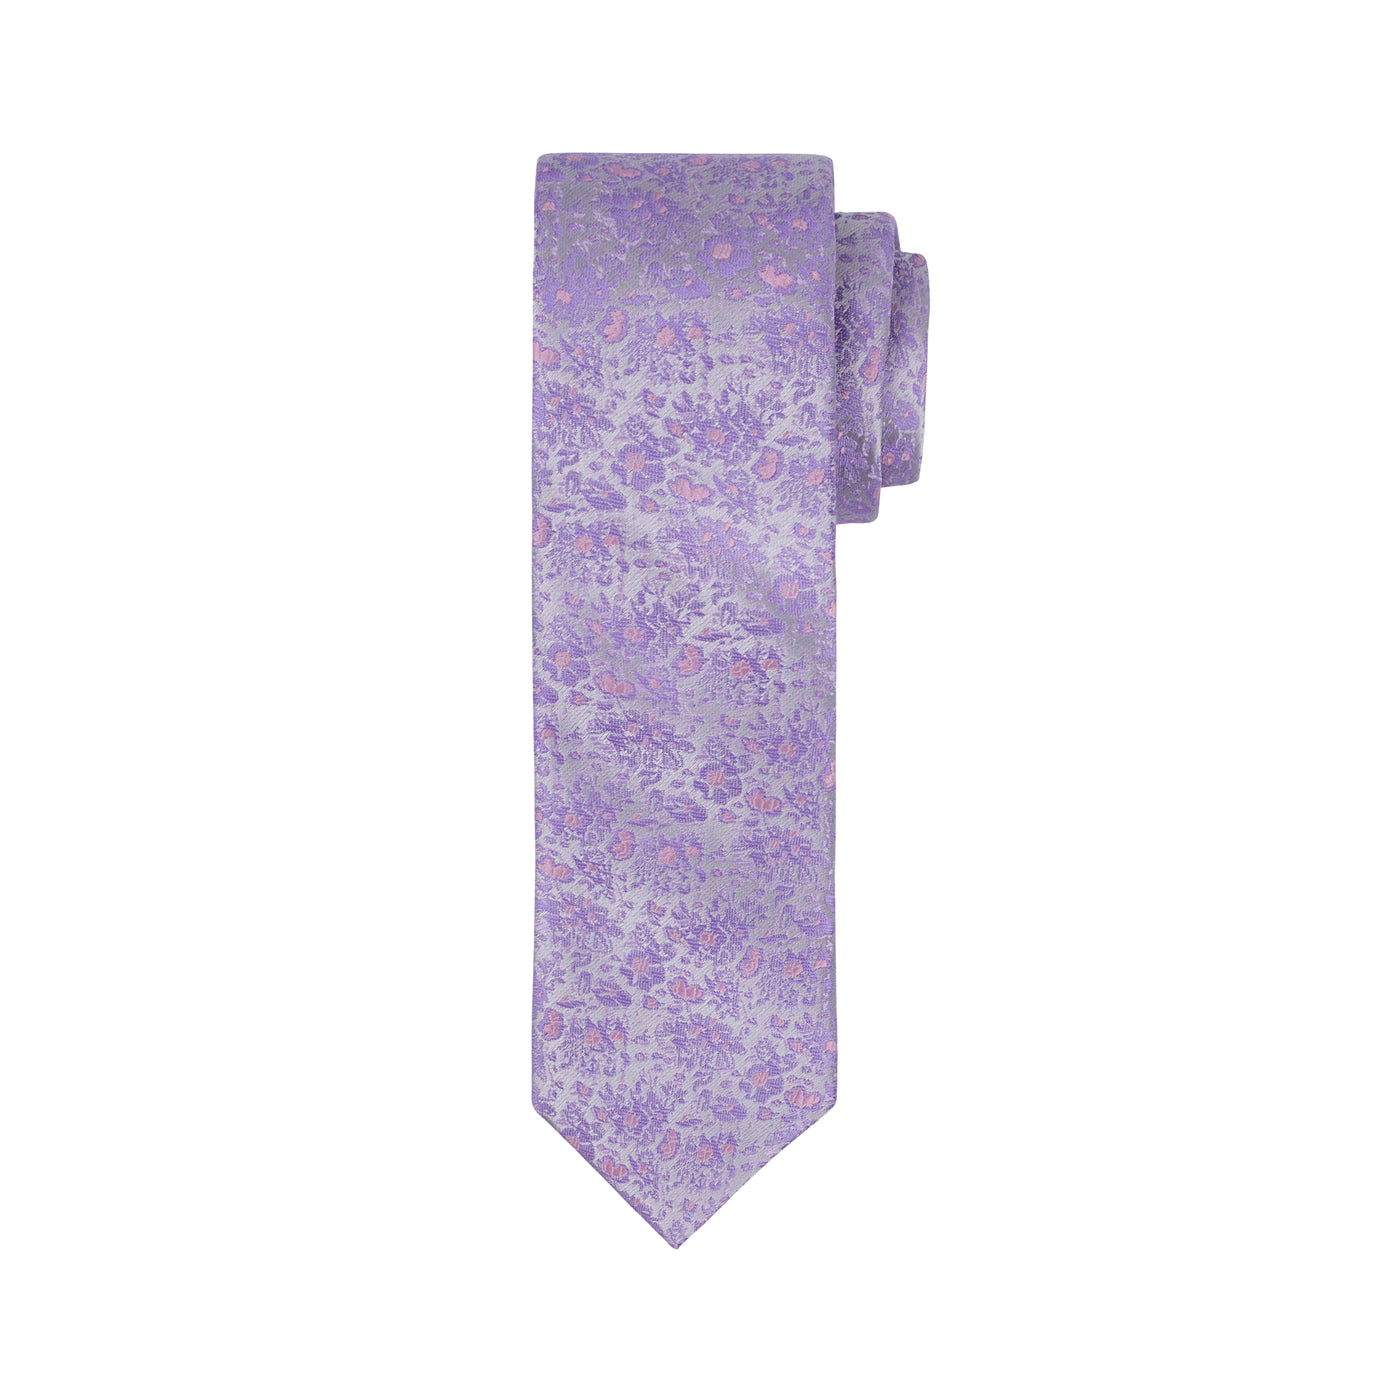 Rose Tie in Lavender